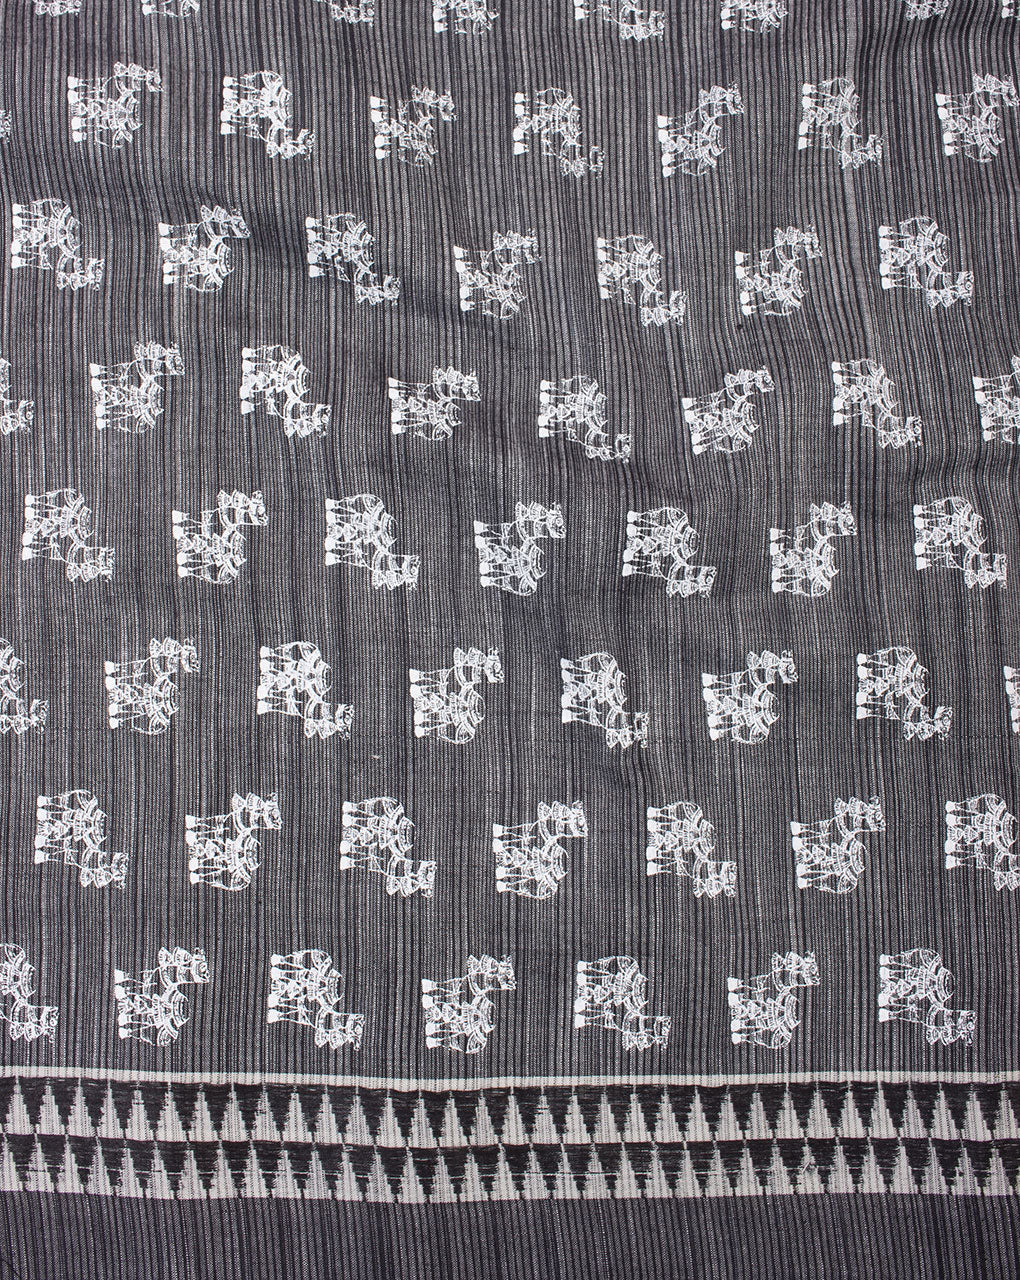 Creature Print Khari Screen Print Bordered Loom Textured Cotton Fabric - Fabriclore.com